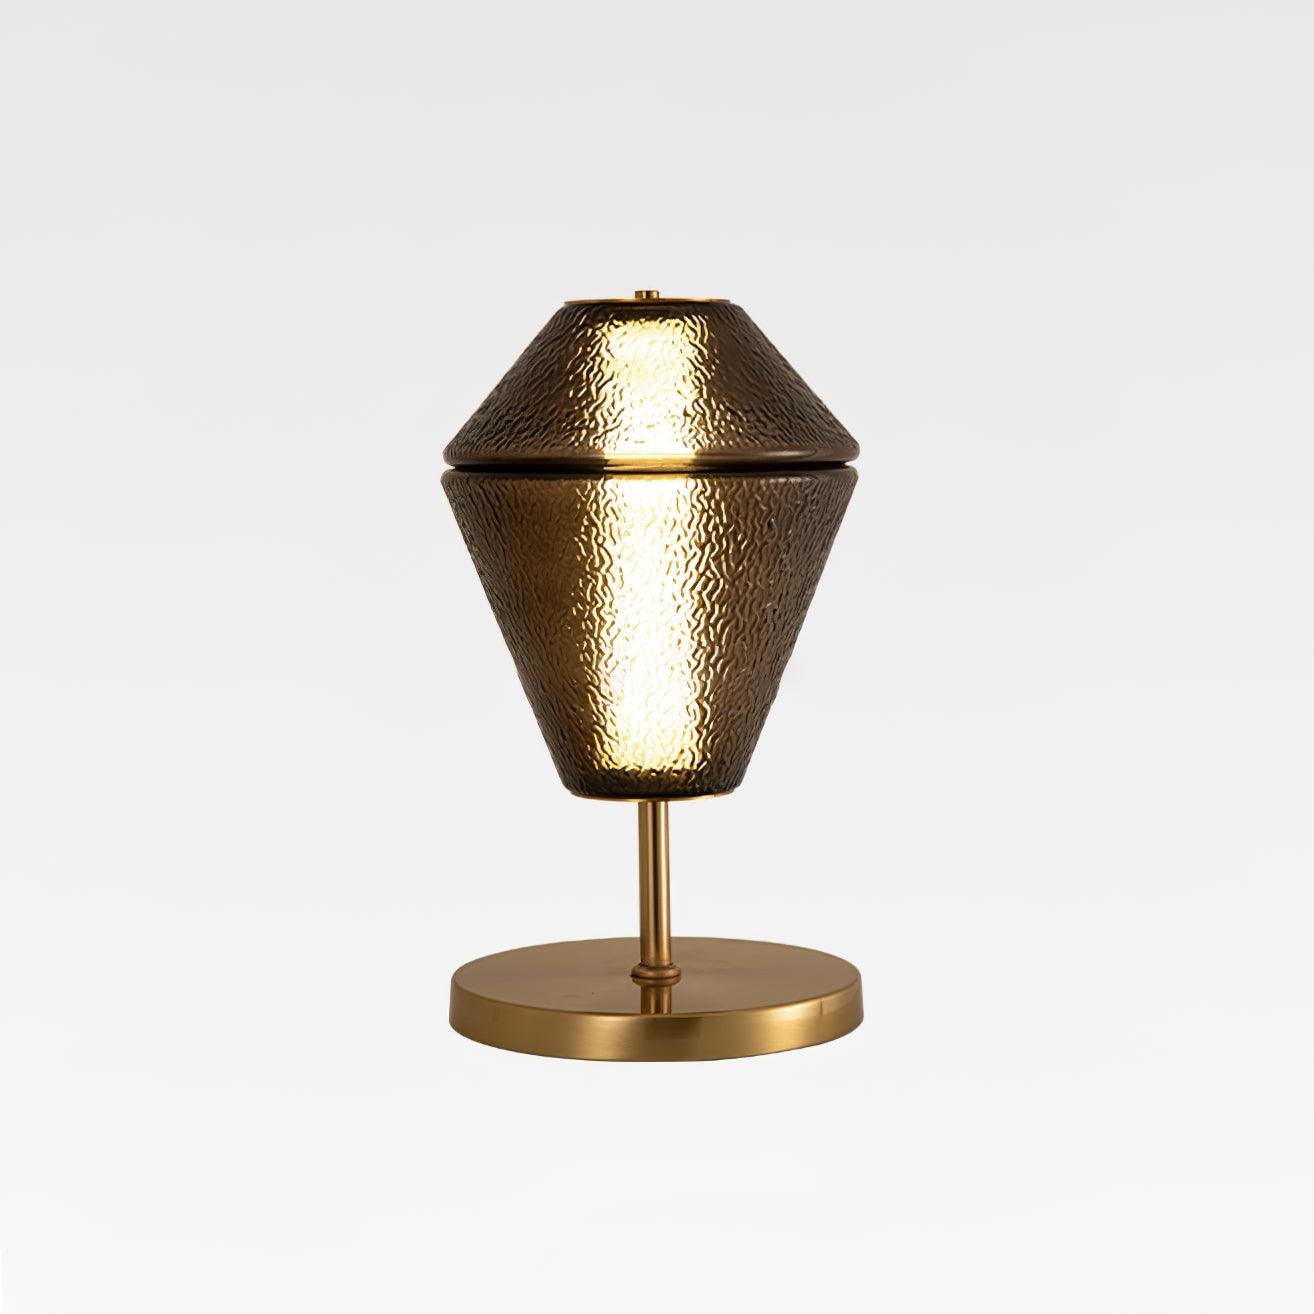 Amber Totem Table Lamp with EU Plug: Diameter 8.6" x Height 16.5" (22cm x 42cm)